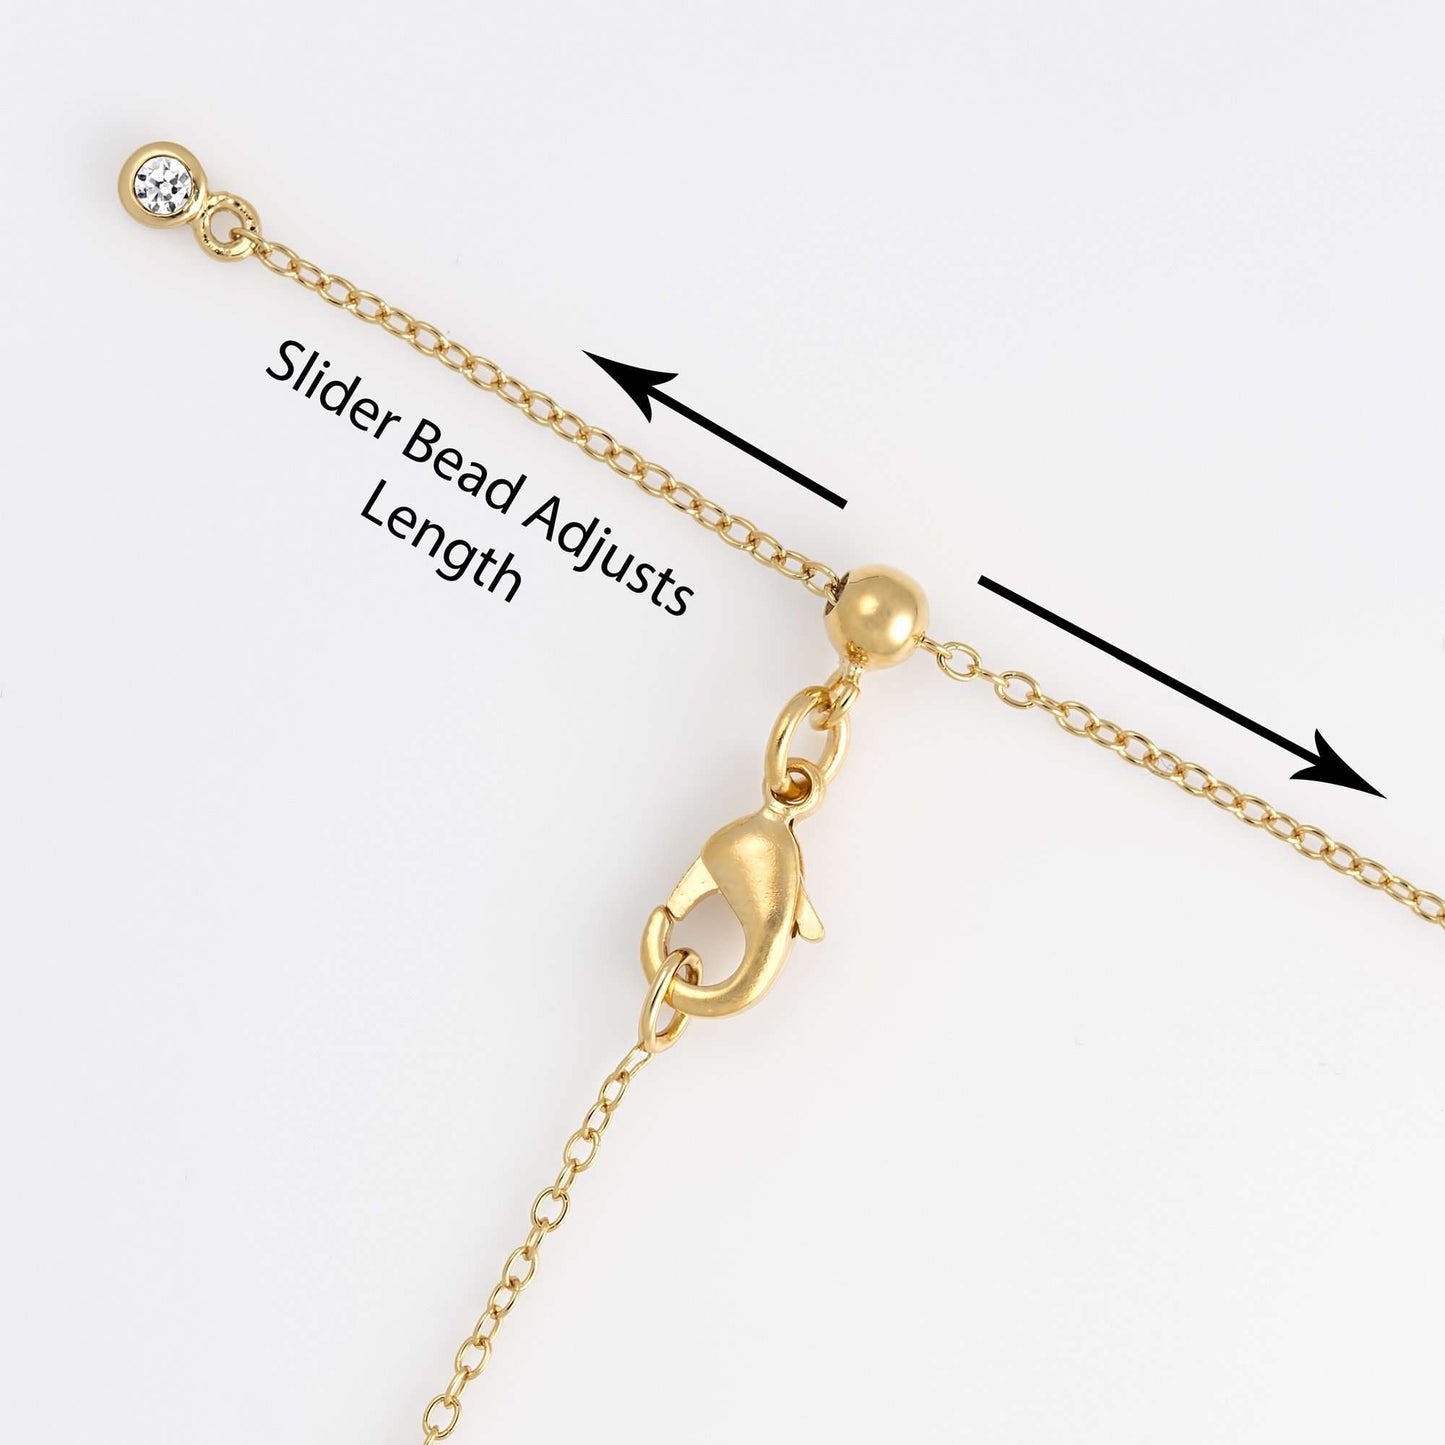 NKL-GPL Starburst Necklace with Slider Clasp